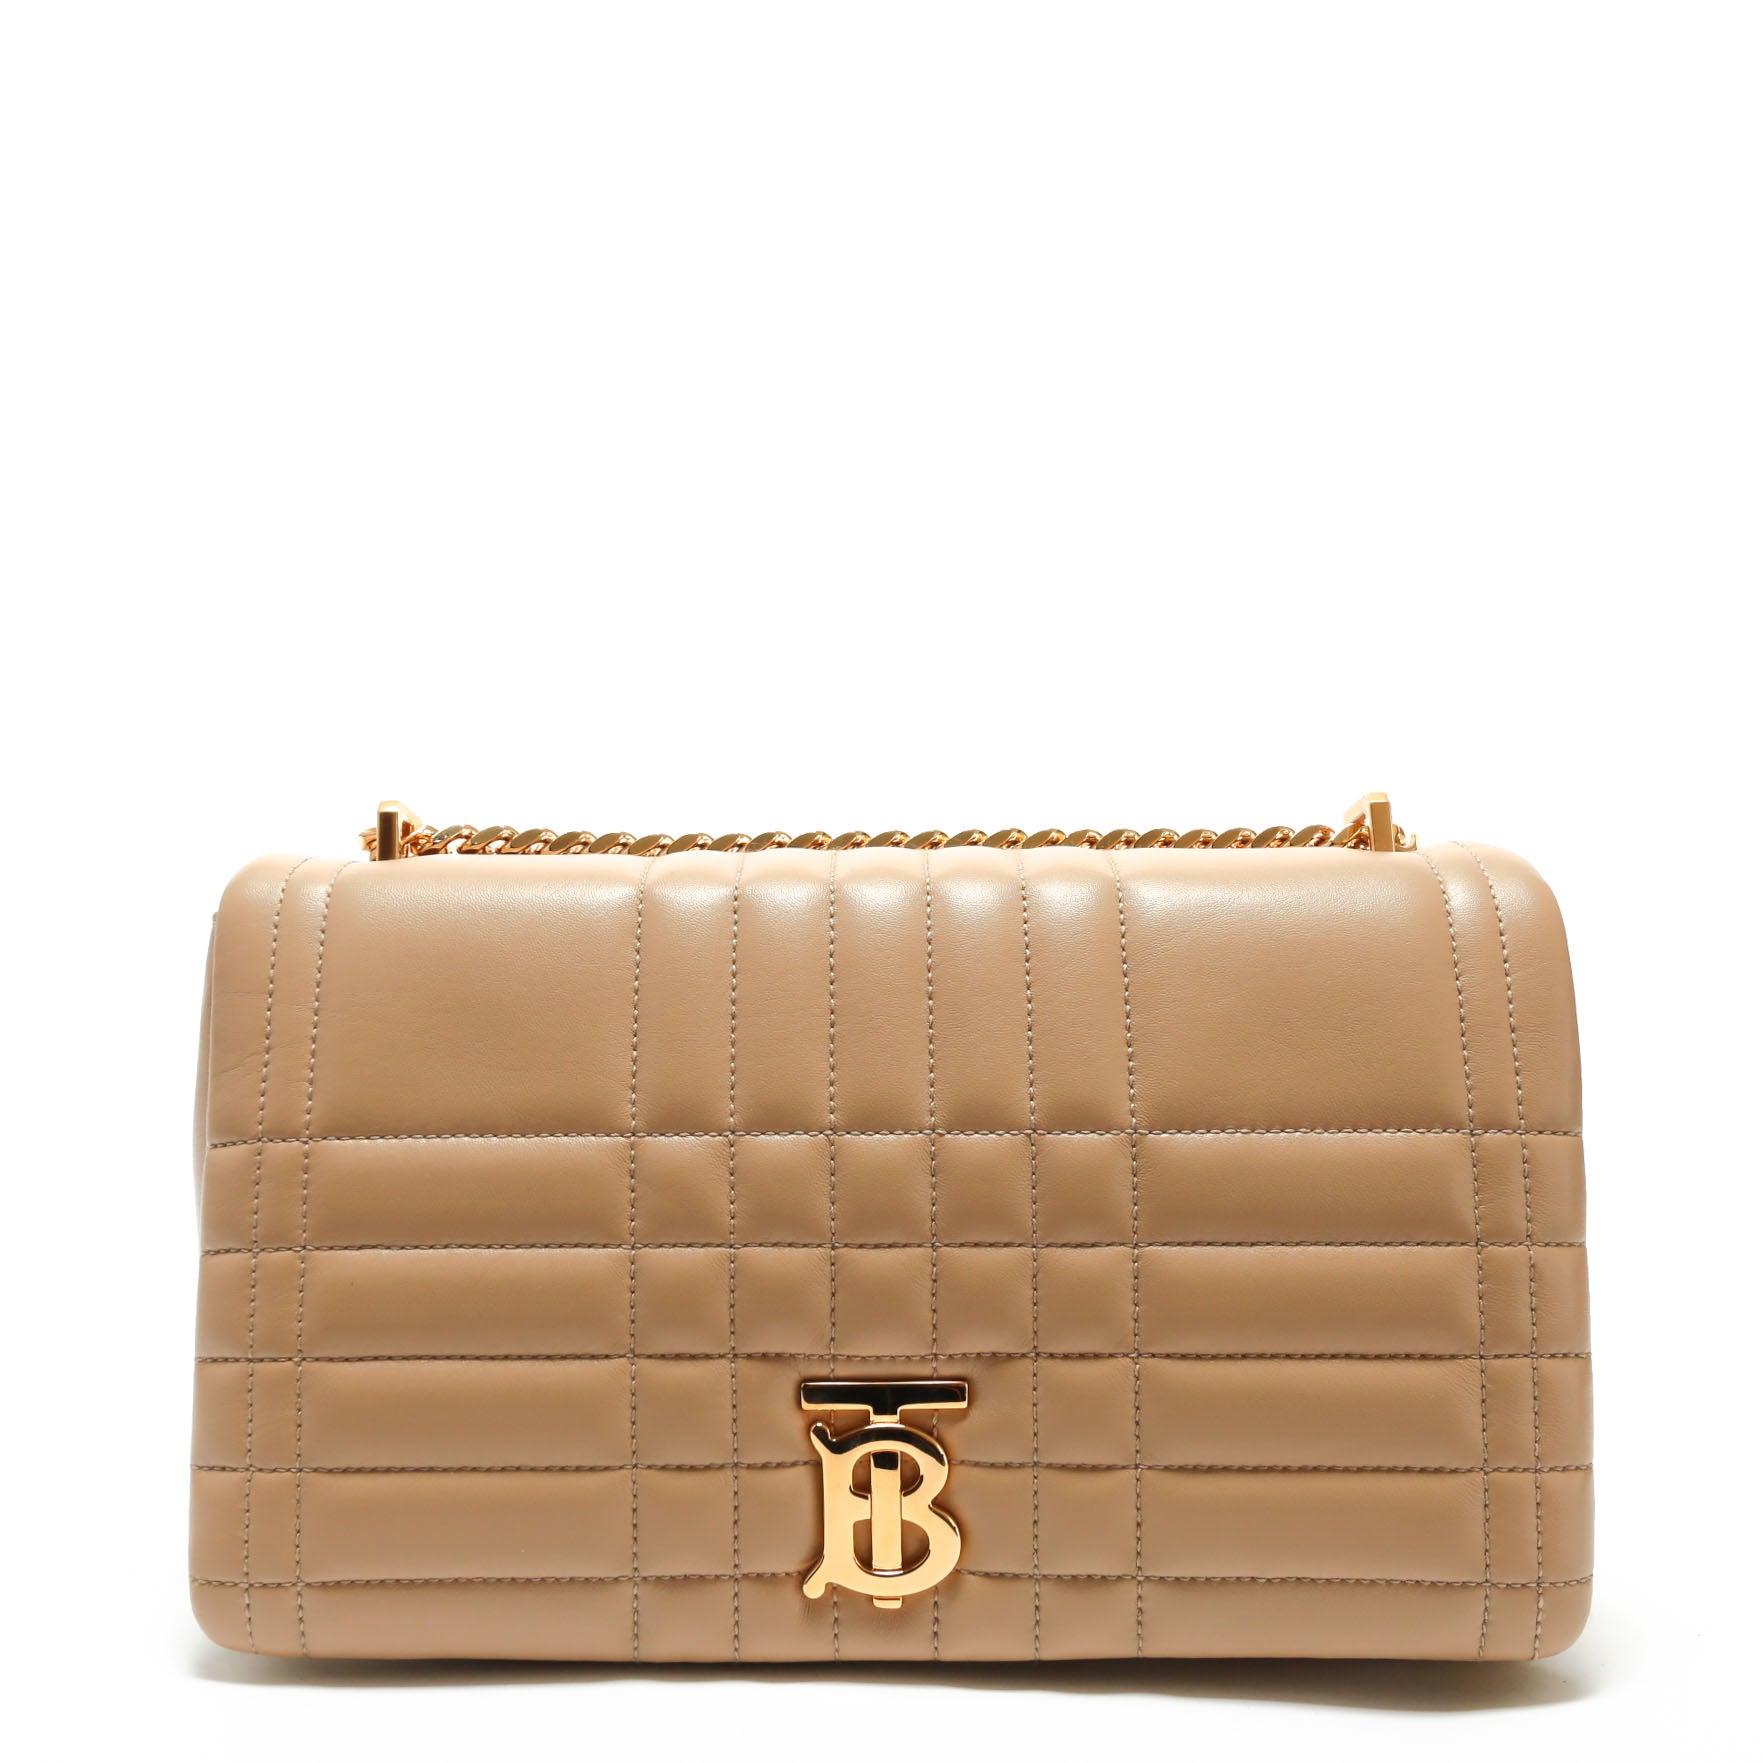 Lola Crossbody bag - Burberry - Leather - Beige